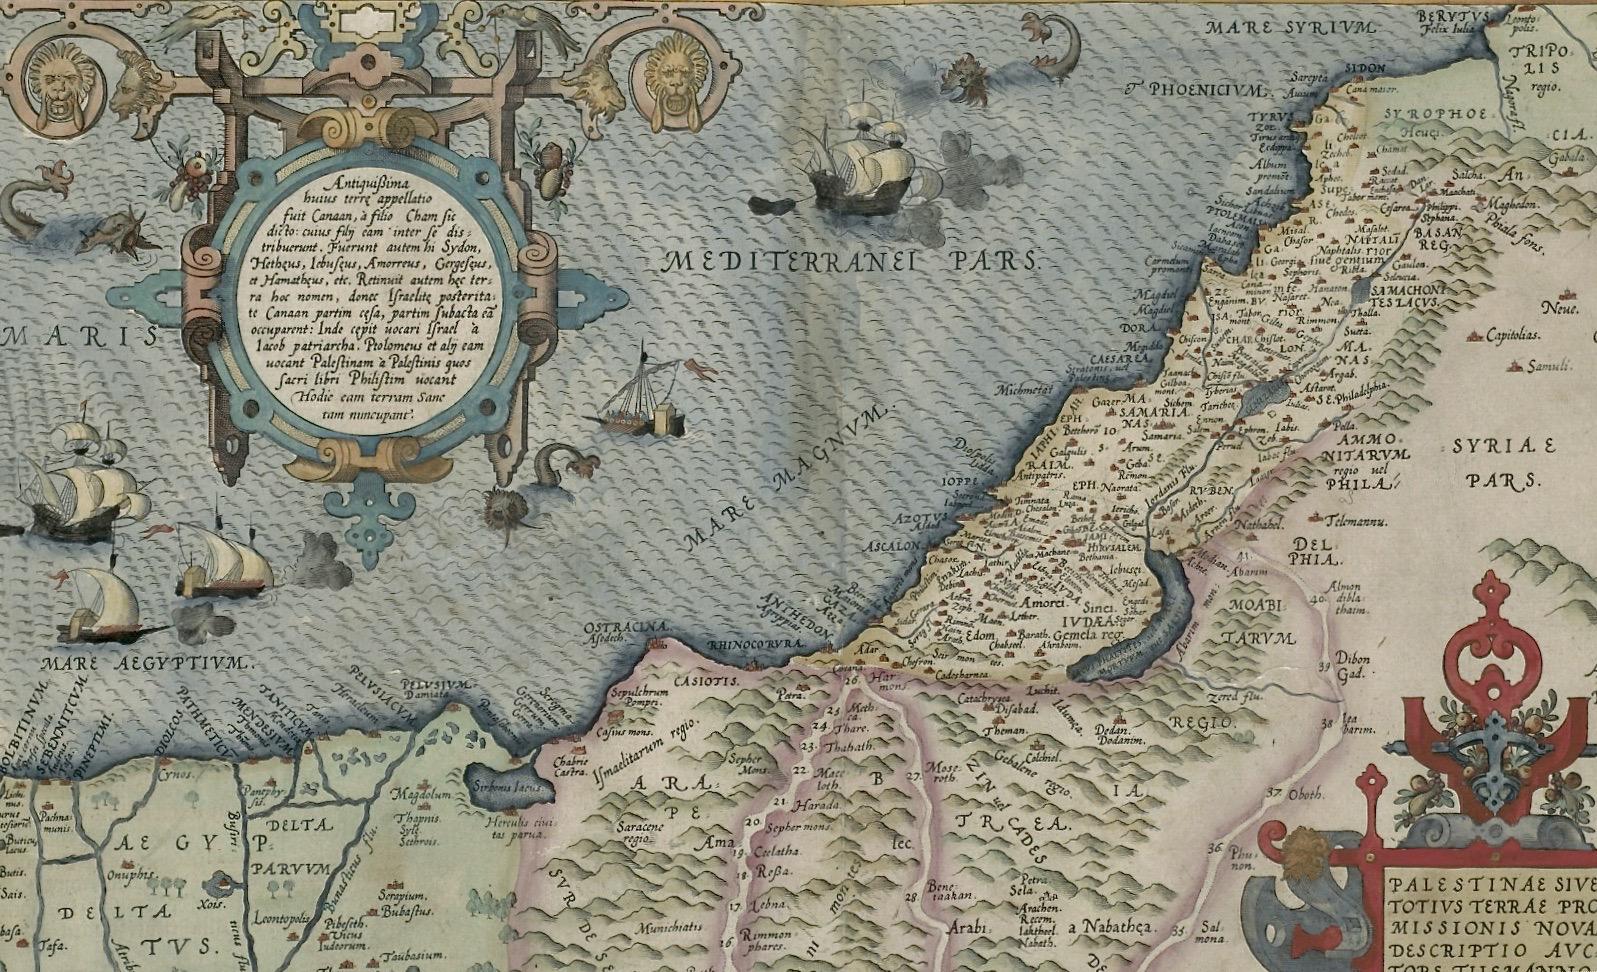 Atlas Ortelius, Palestinae sive totius Terrae Promissionis nova descriptio (λεπτομέρεια), Antwerp 1571, ΚΒ Νationale Bibliotheek, Χάγη.